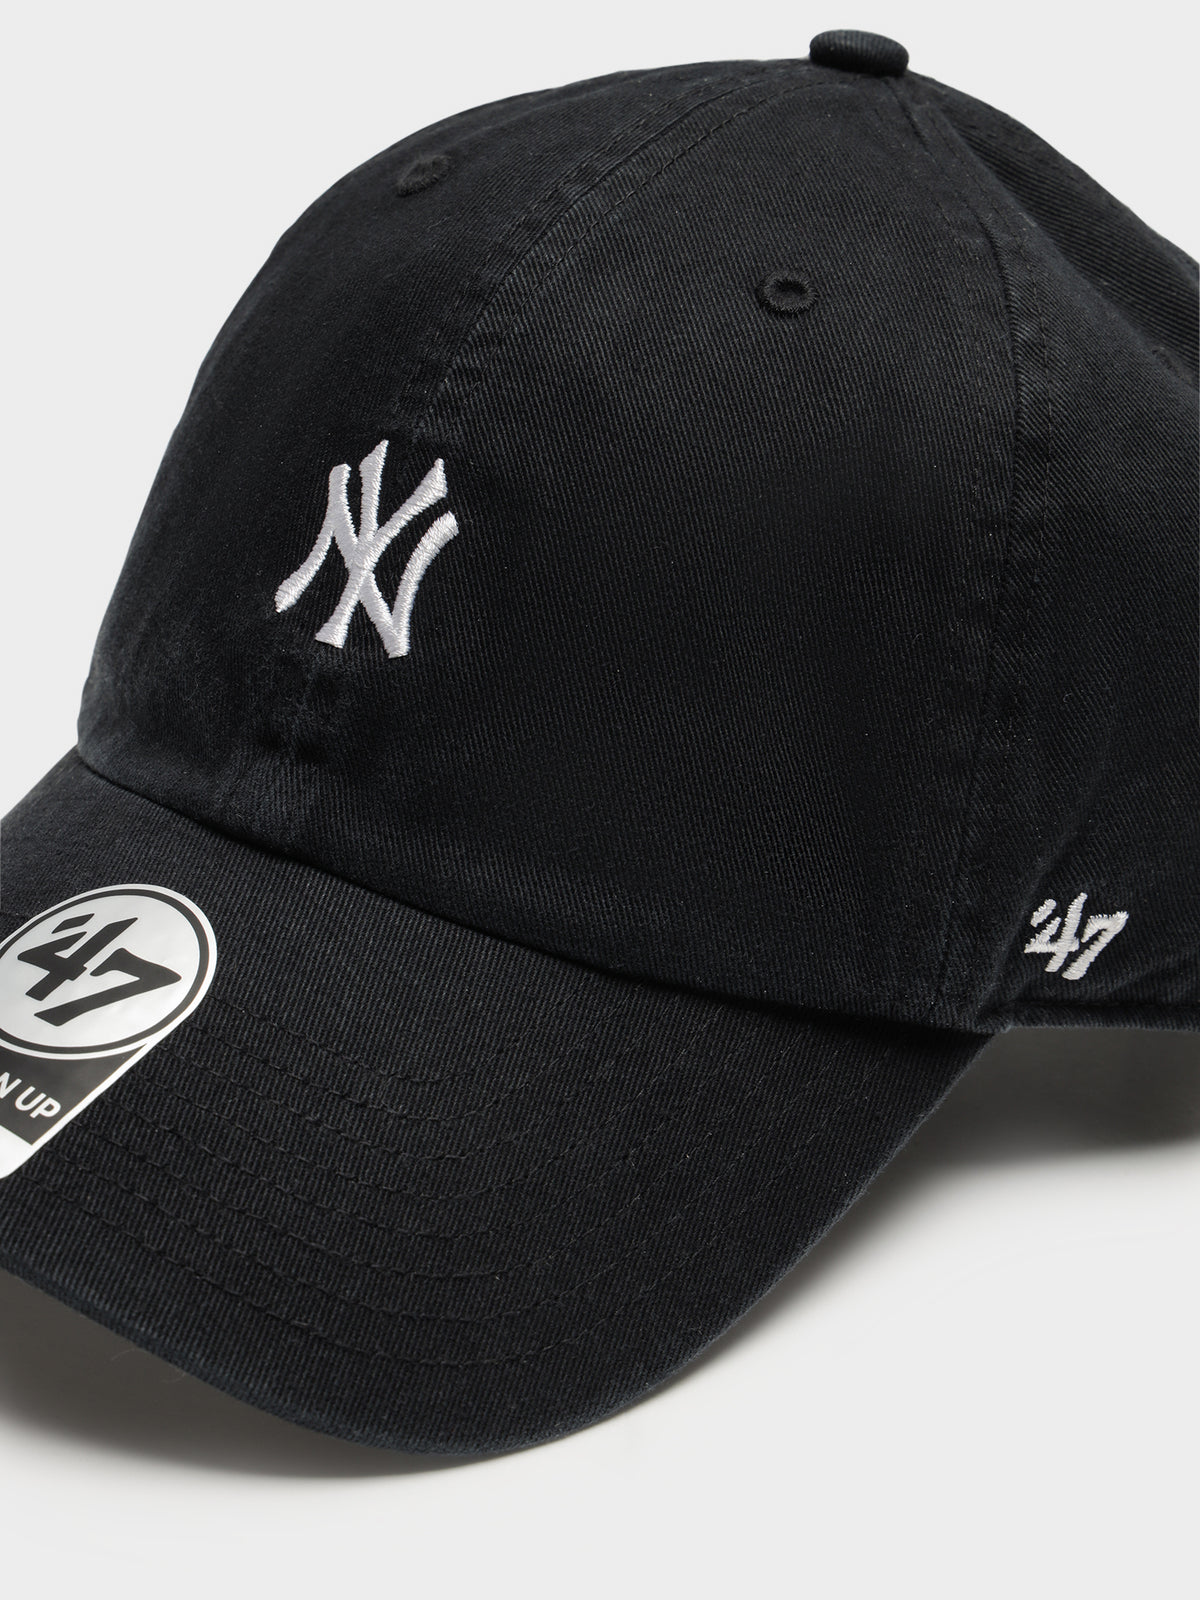 Base Runner NY Yankees Cap in Black